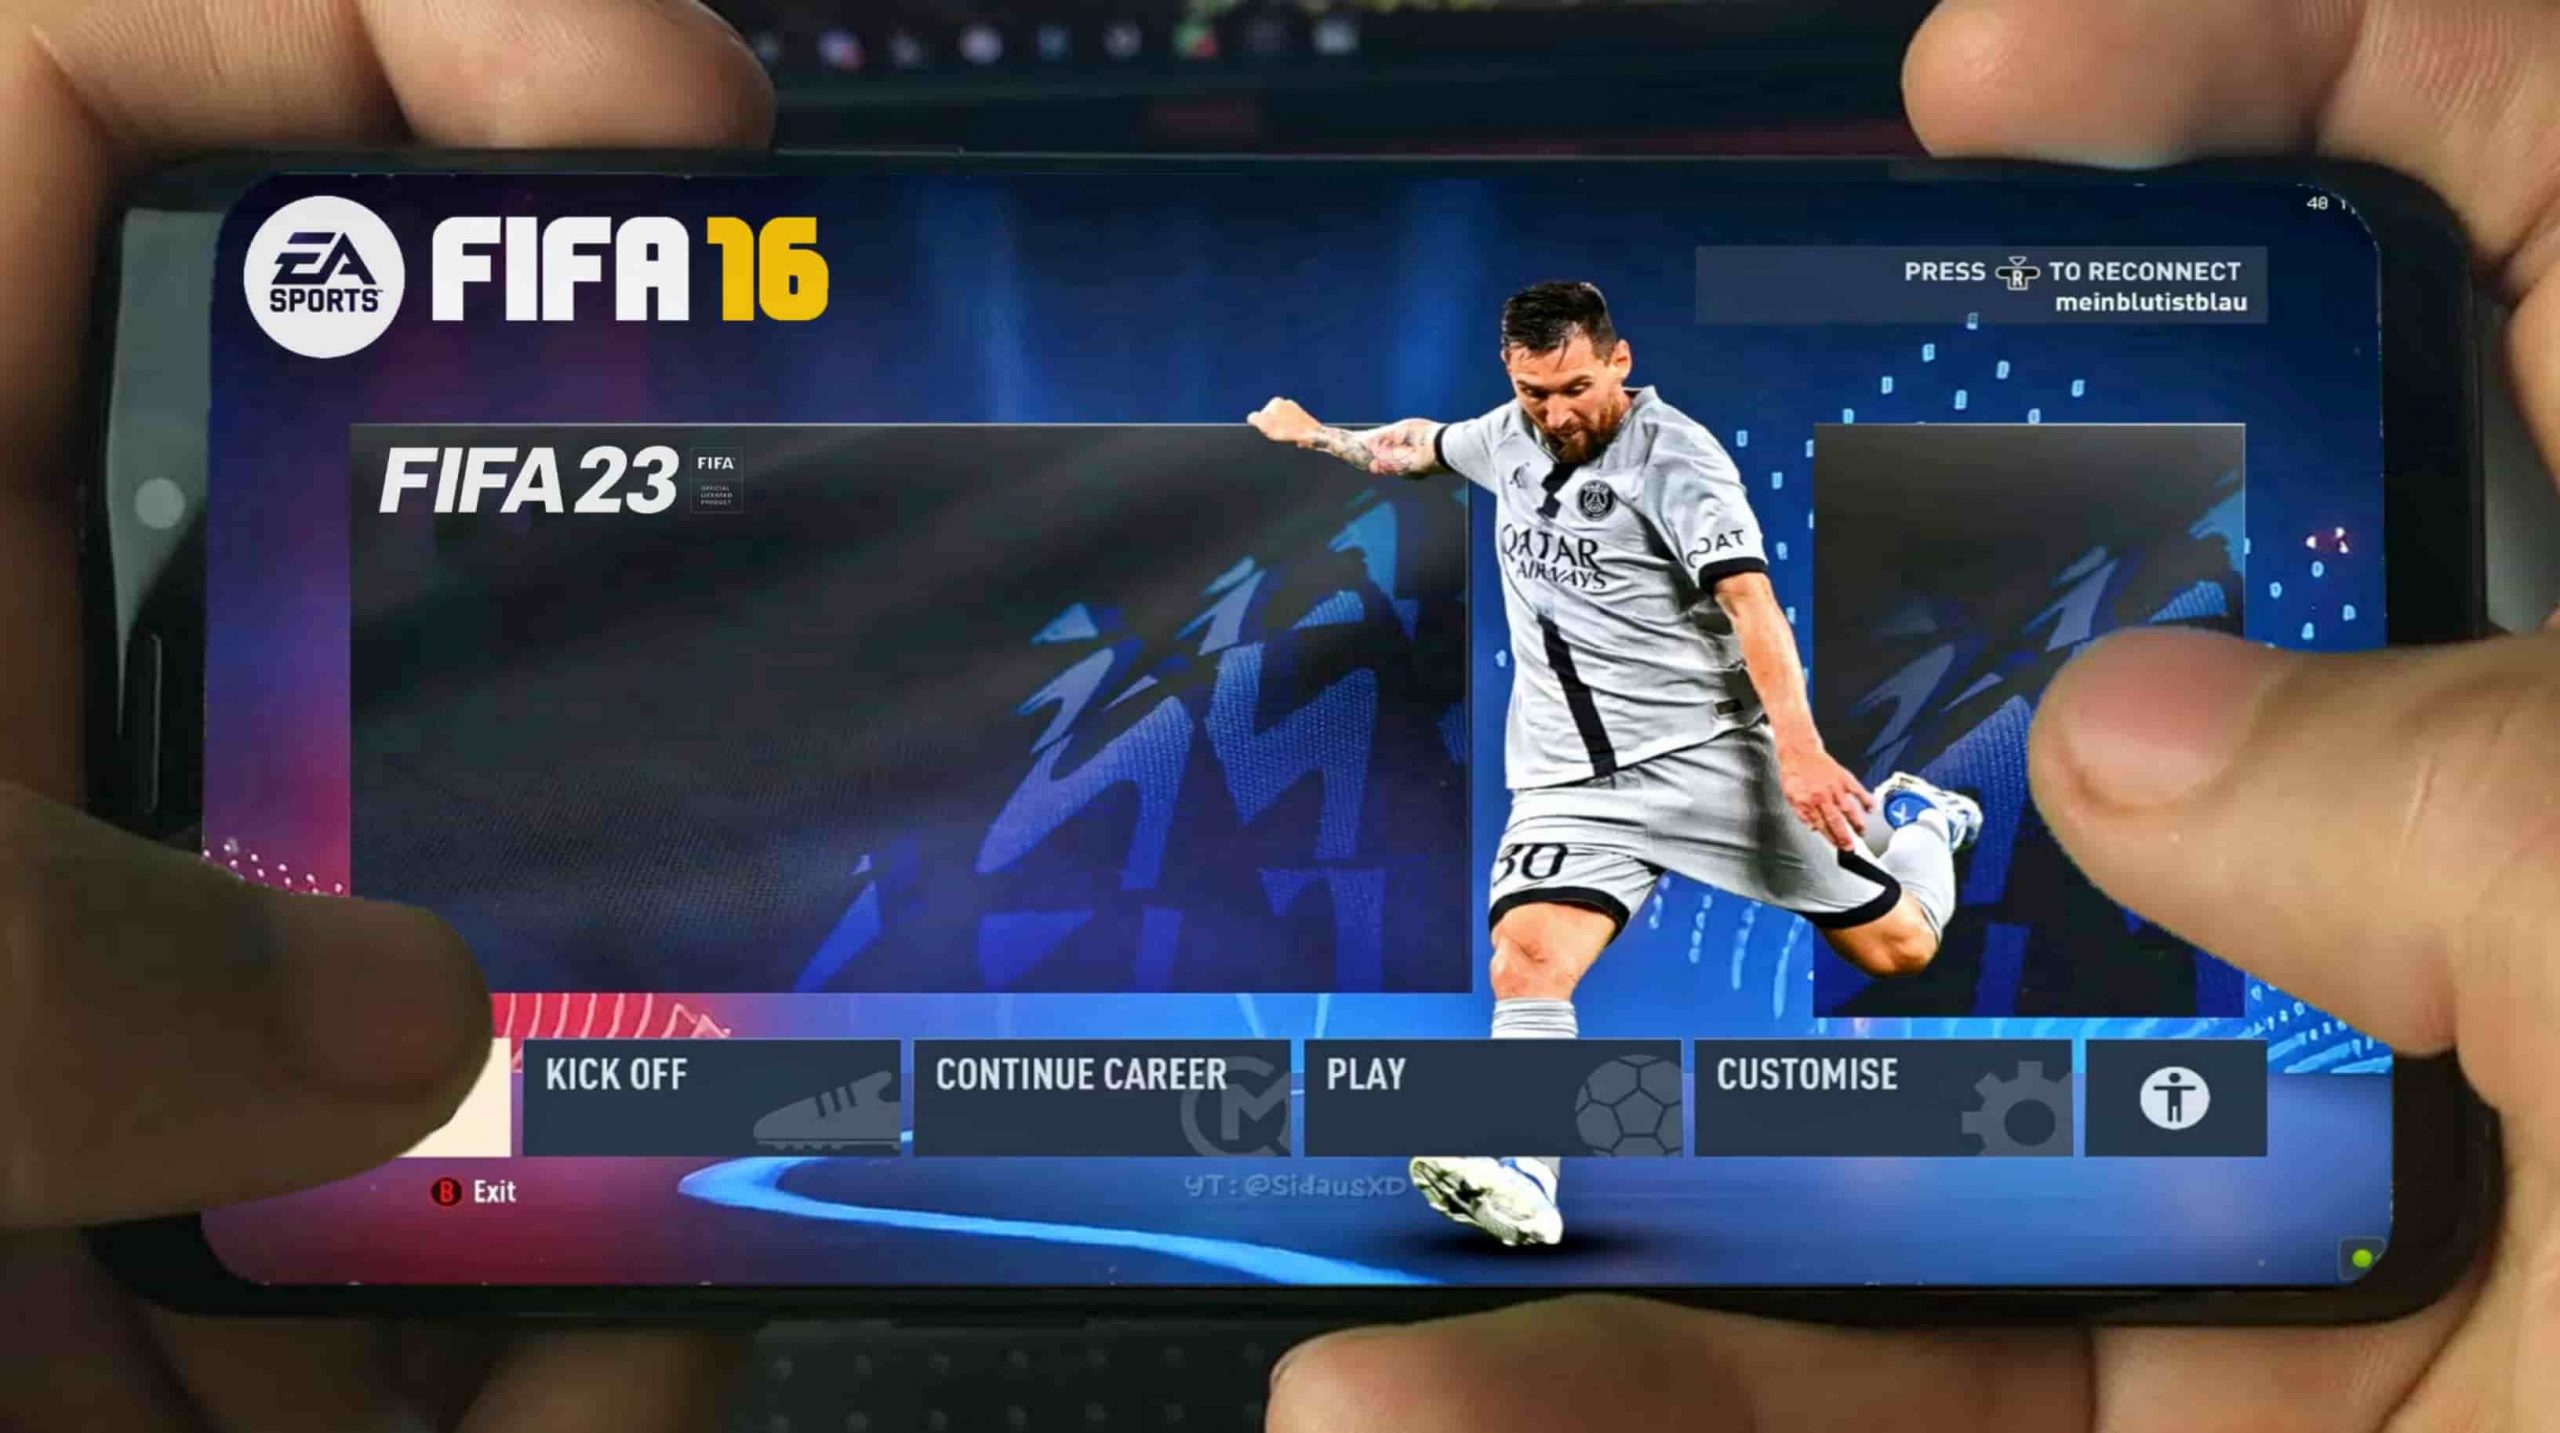 FIFA 16 Mod FIFA 24 APK+OBB+Data Offline Download Android